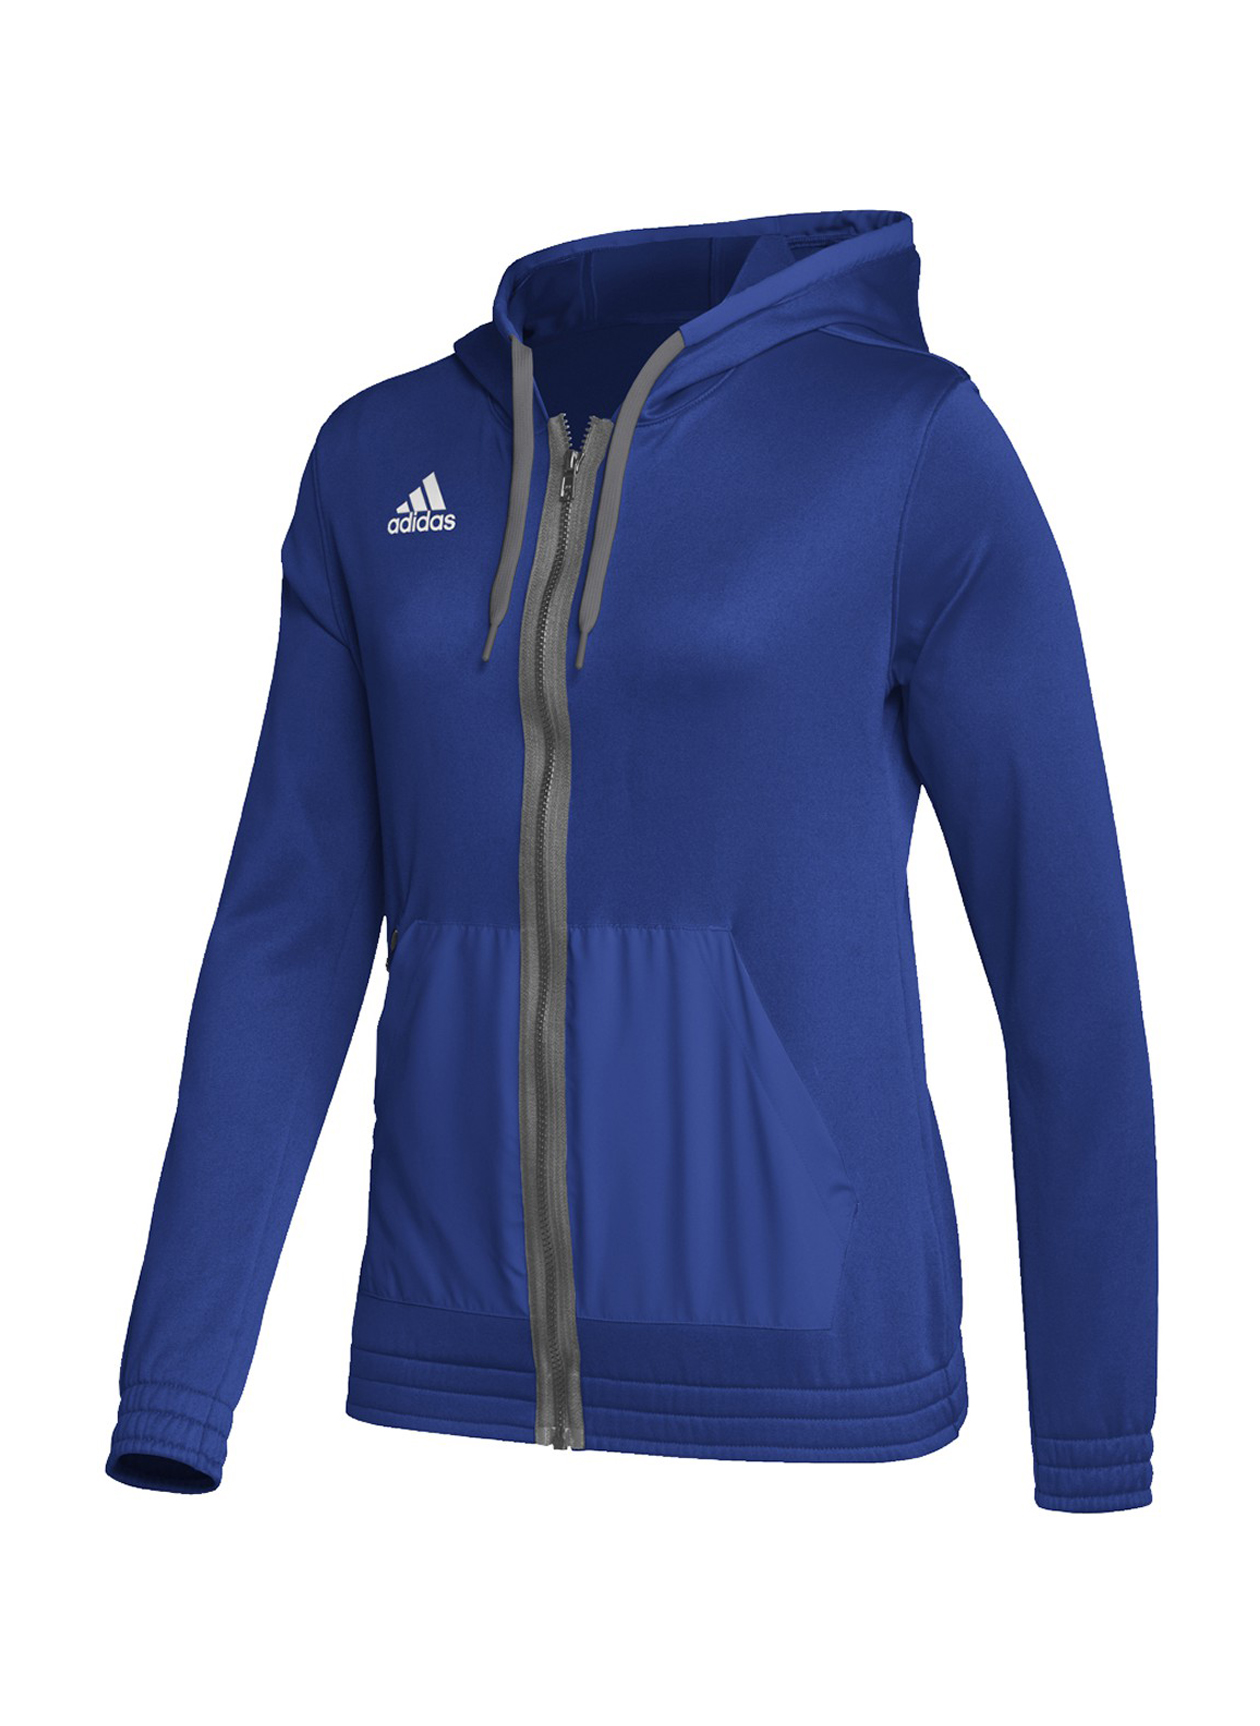 Adidas AD238 - Women's Team Issue Full-Zip Hoodie